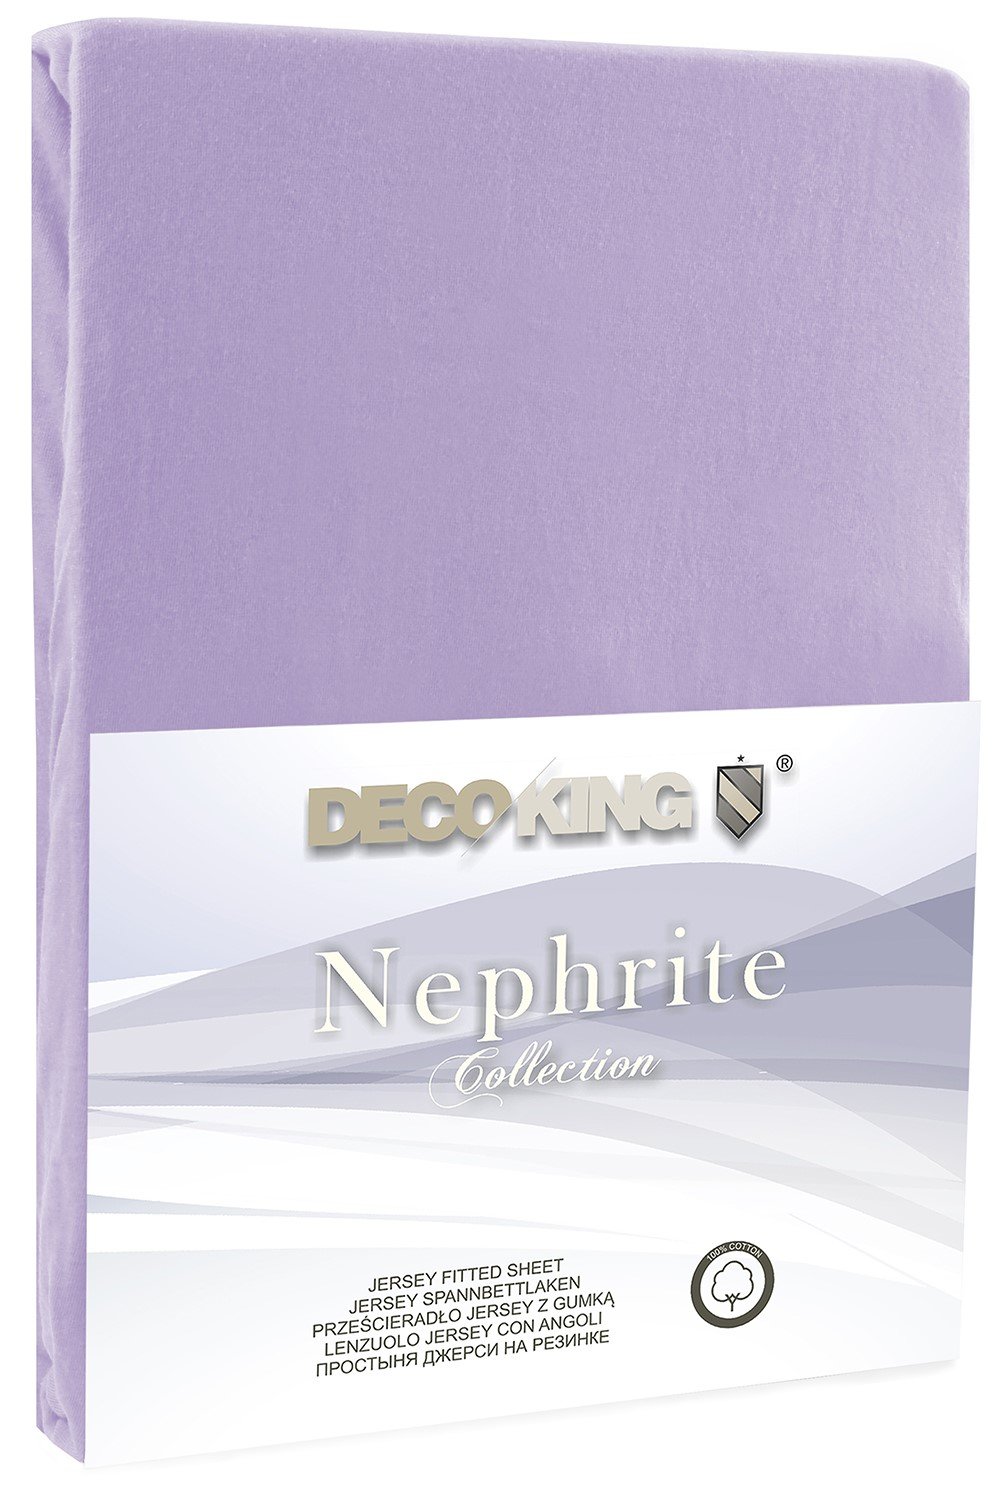 Jersey paklodė su guma Decoking NEPHRITE Light violet, 120x200 cm